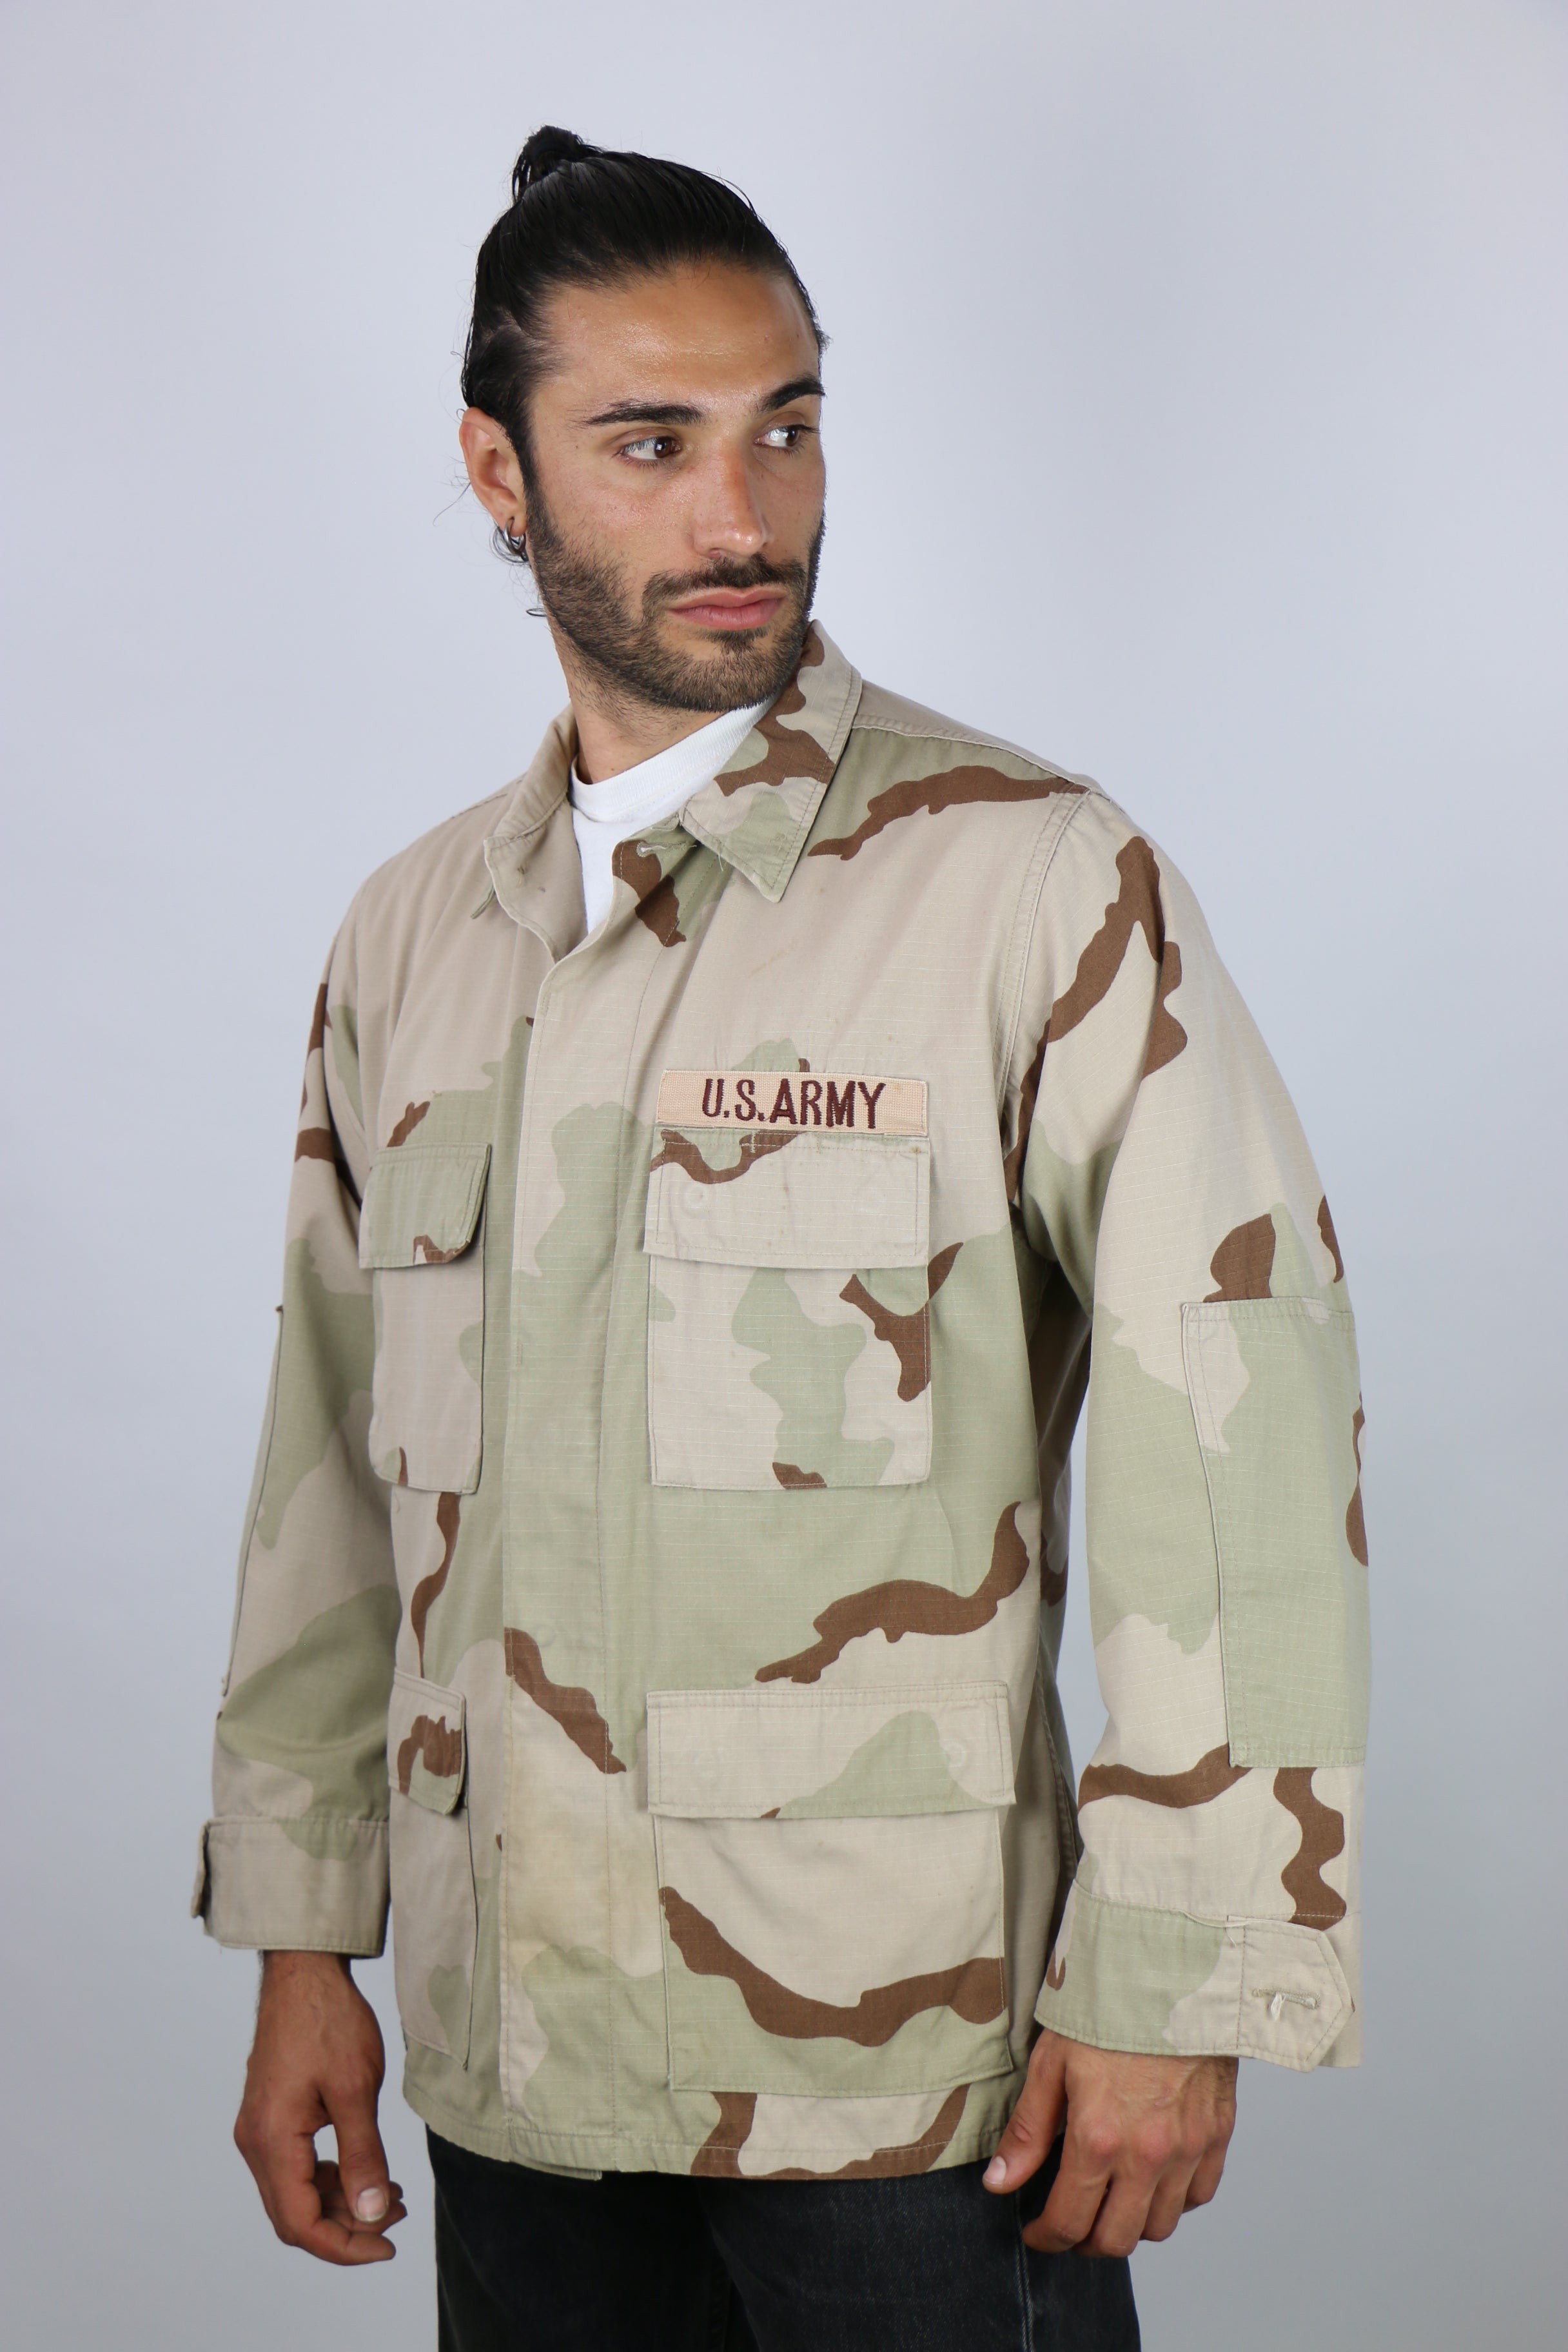 American Army Vintage Men's M Desert Camo Jacket Cargo USA 